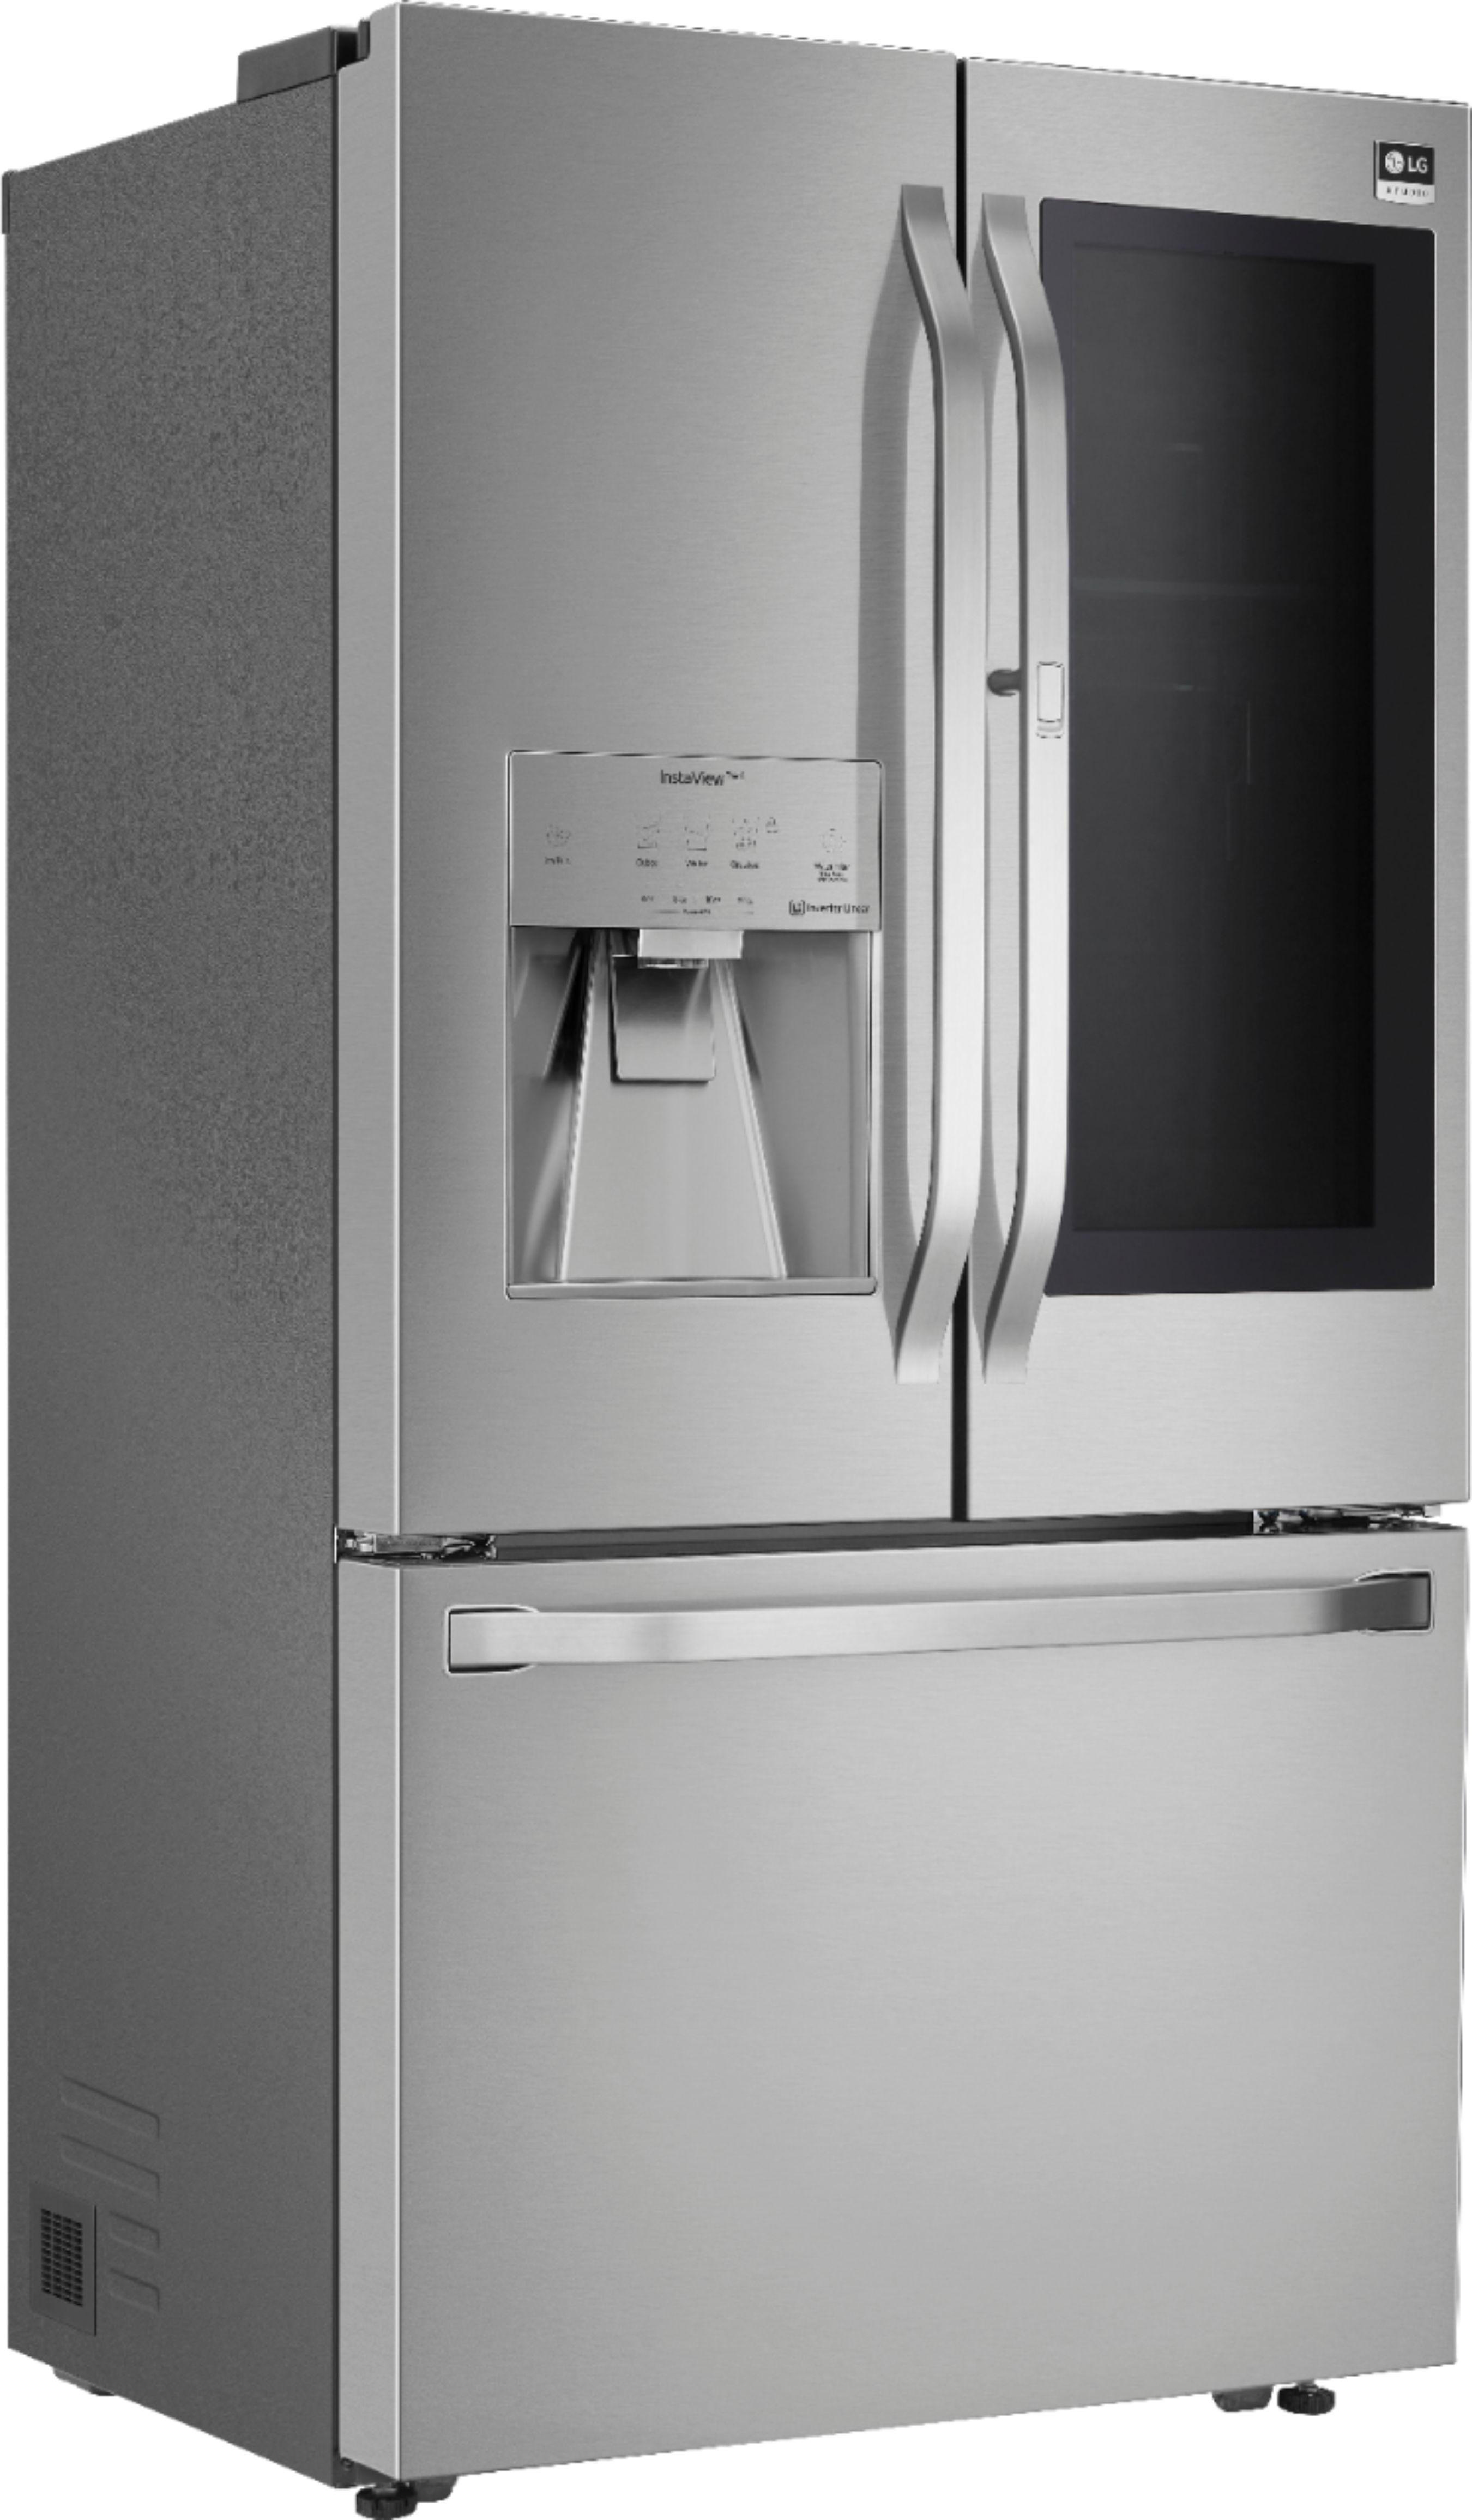 Angle View: LG - STUDIO 23.5 Cu. Ft. French InstaView Door-in-Door Counter-Depth Refrigerator with Craft Ice - Stainless Steel